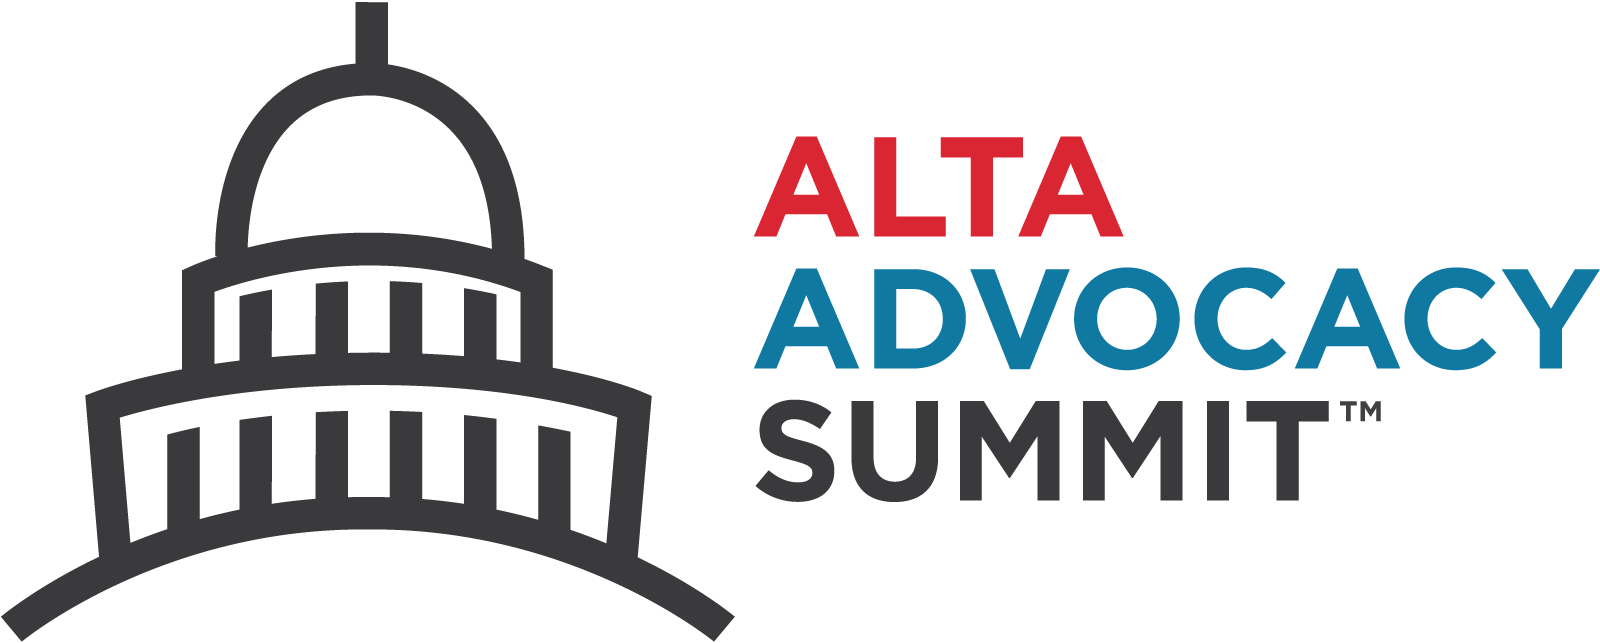 ALTA Advocacy Summit logo